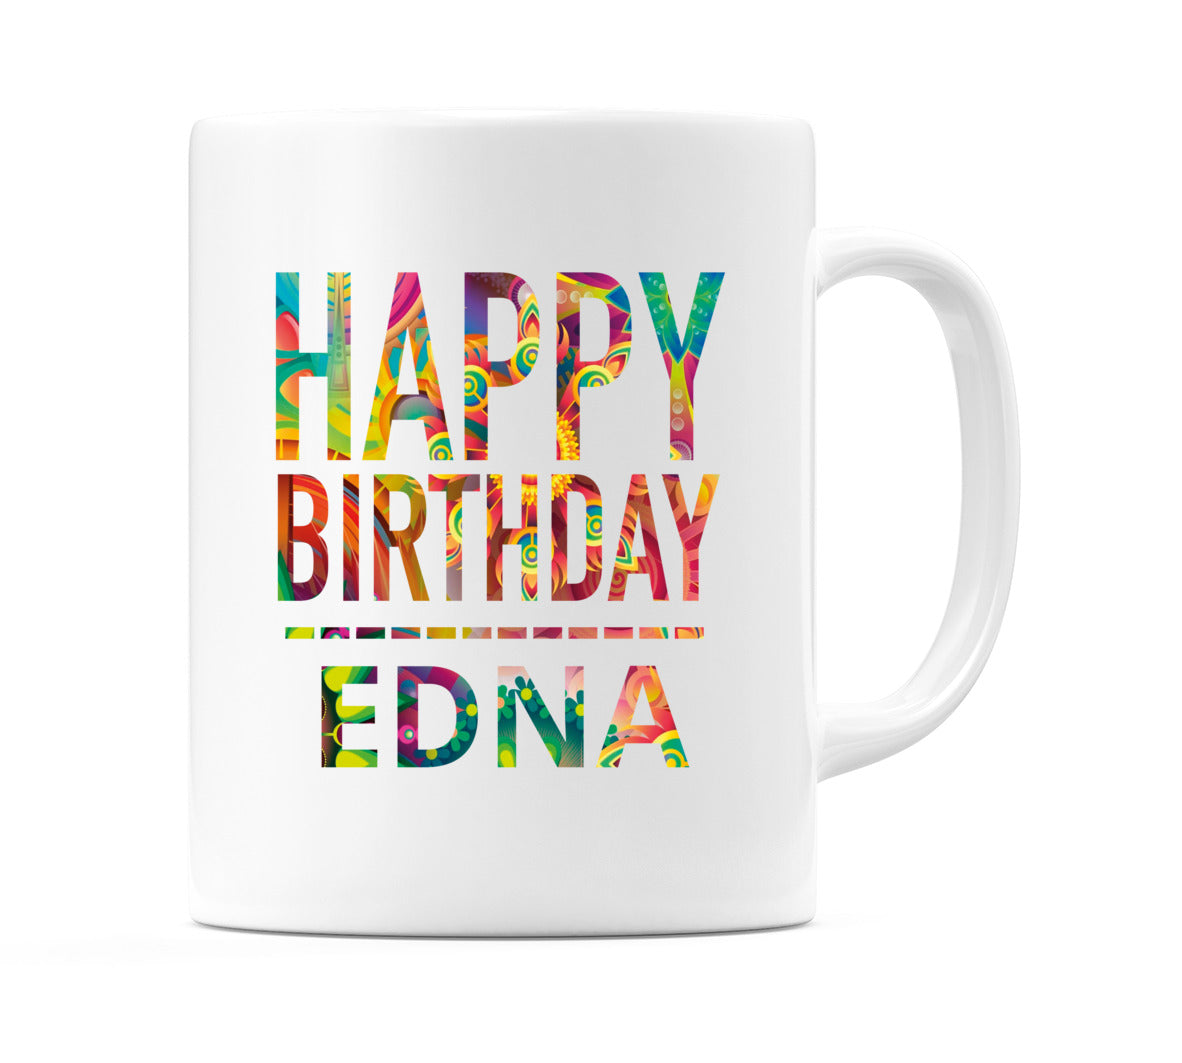 Happy Birthday Edna (Tie Dye Effect) Mug Cup by WeDoMugs